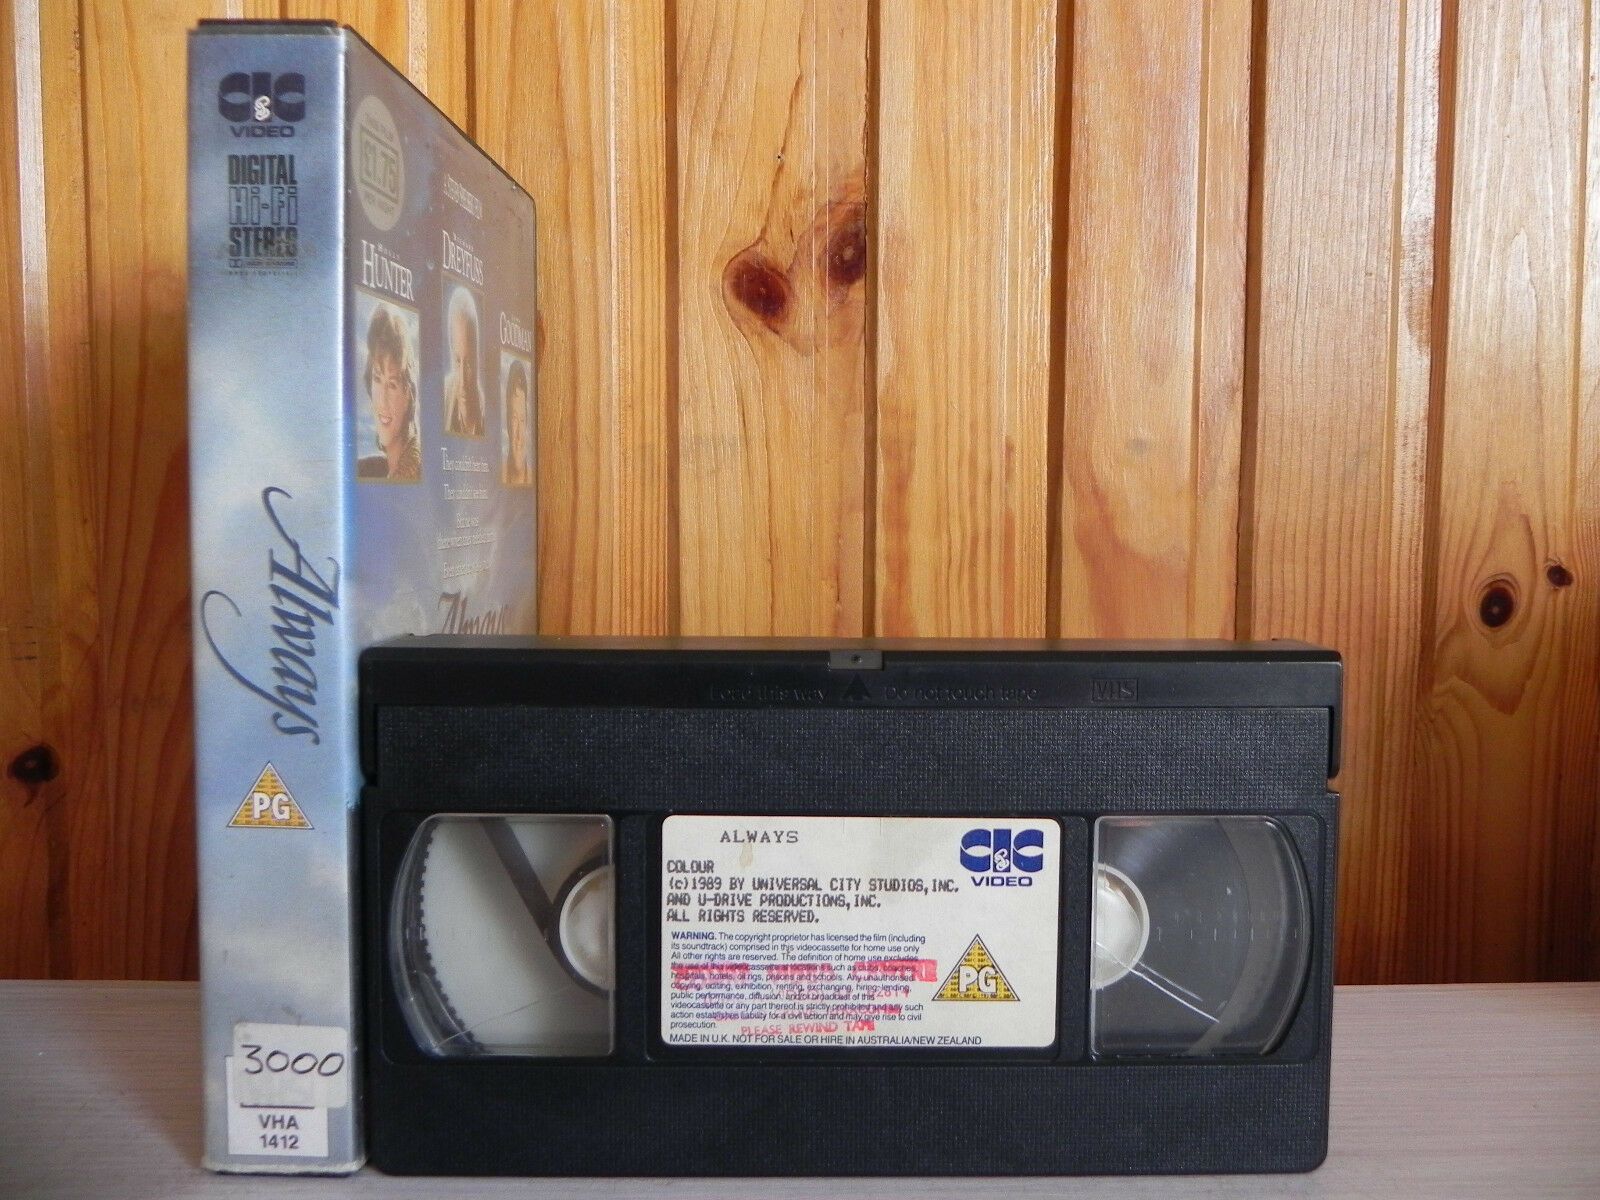 Always - CIC Video - Drama - A Steven Spielberg Film - Holly Hunter - Pal VHS-